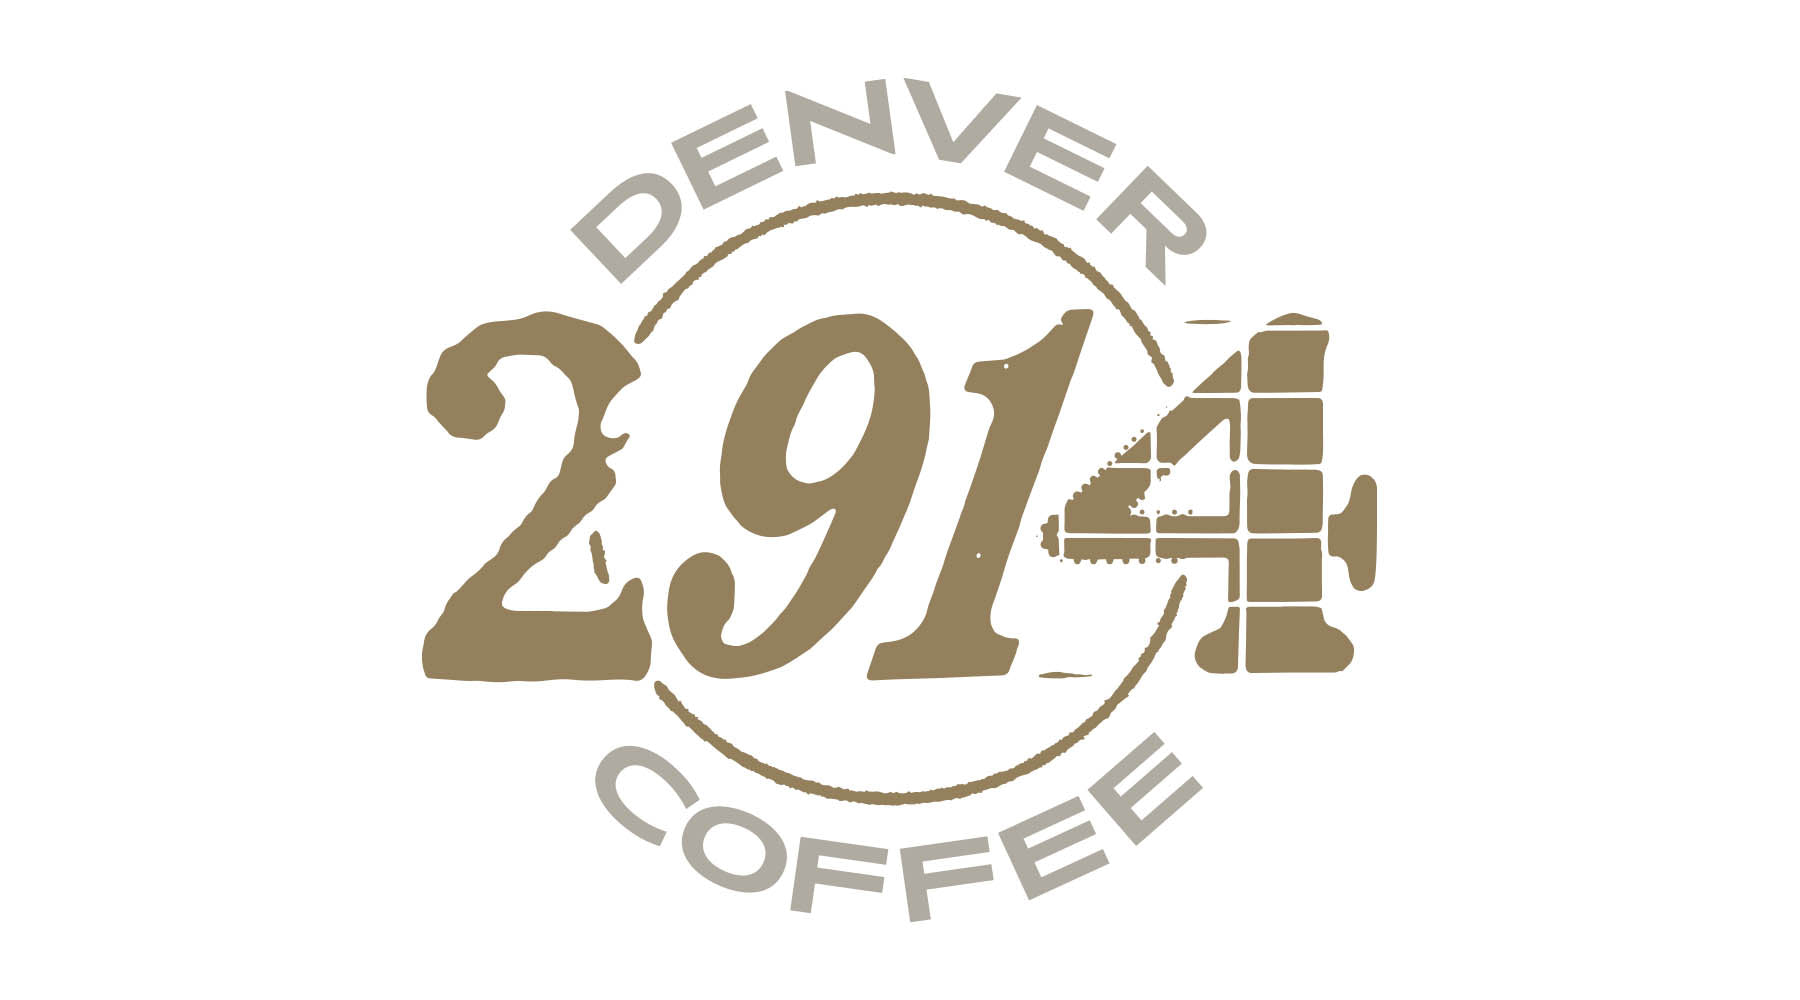 2914 coffee logo by akyros art and design co in denver colorado